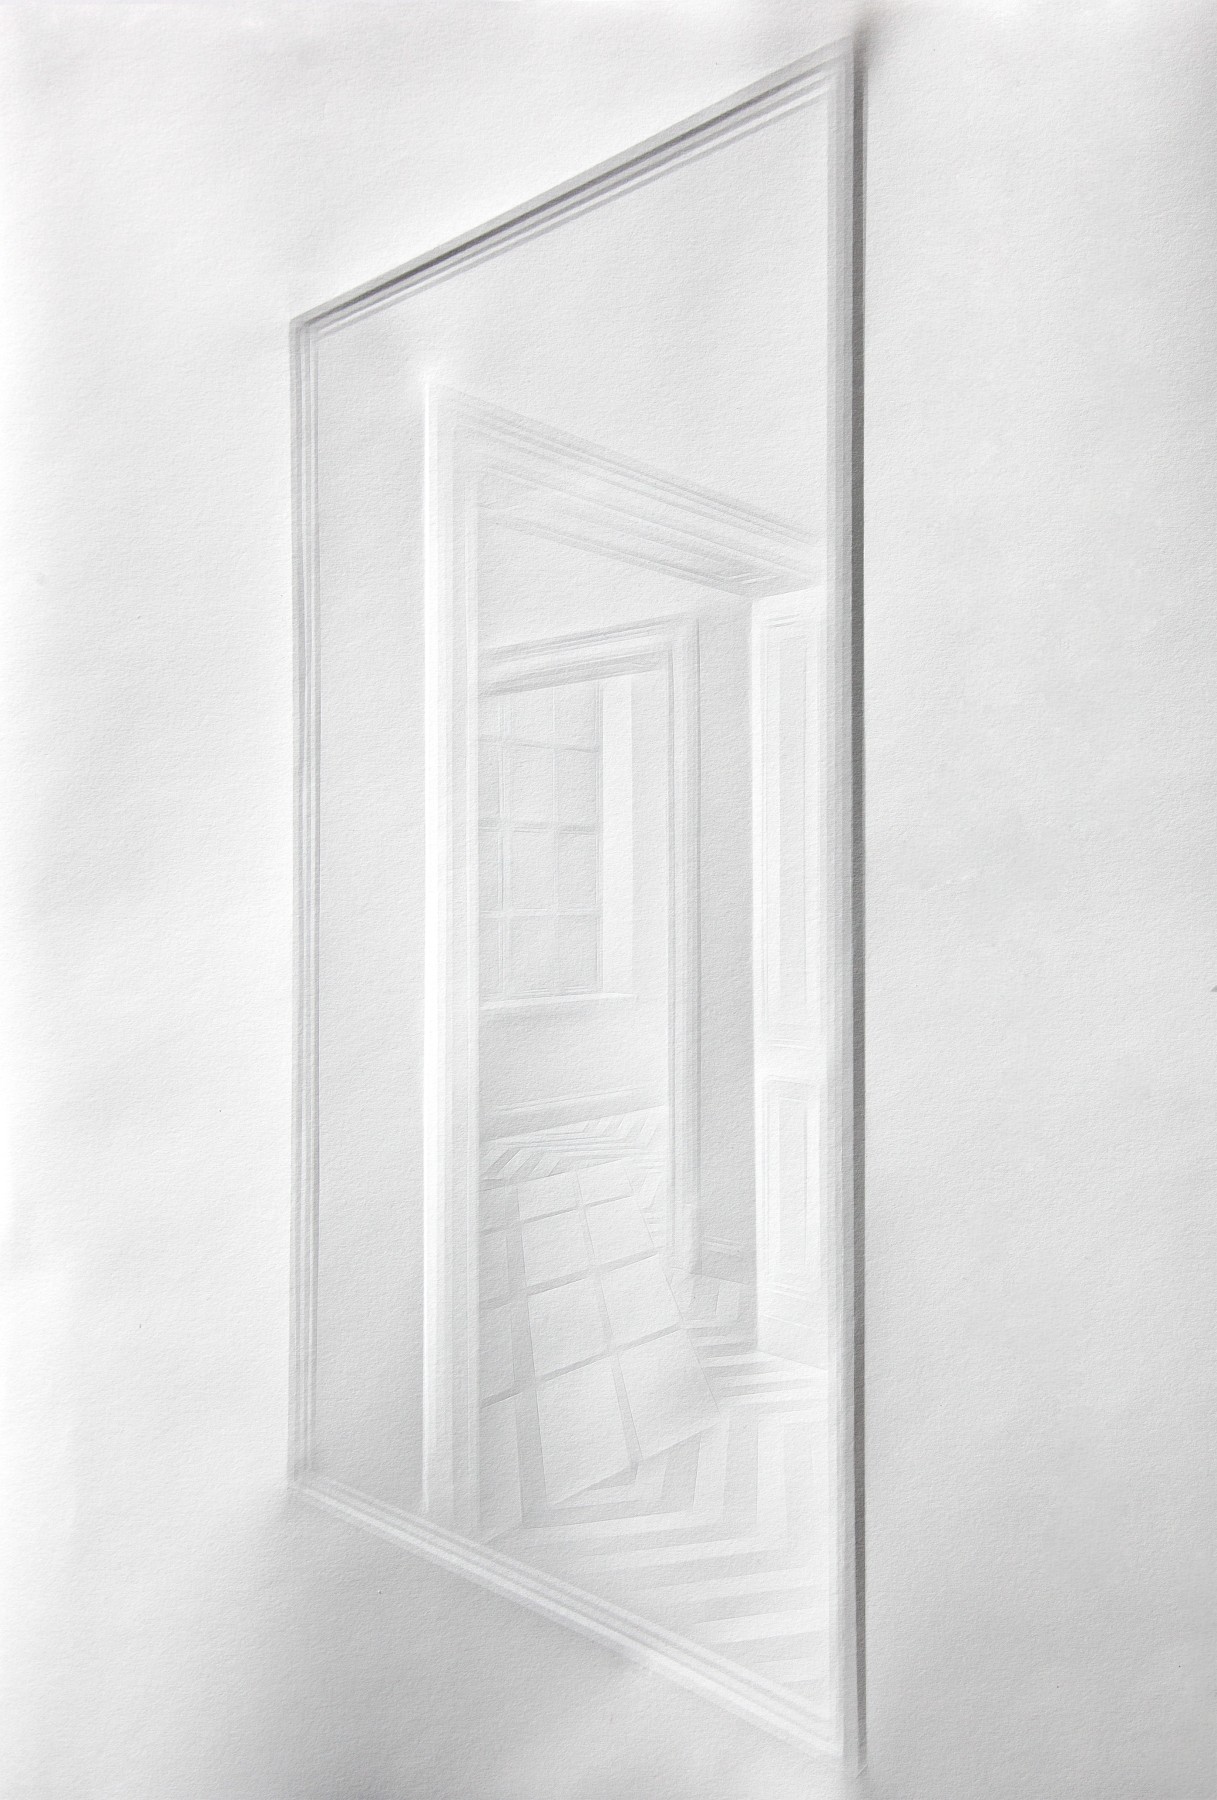 Simon Schubert, Untitled (Mirrorspace), 2023